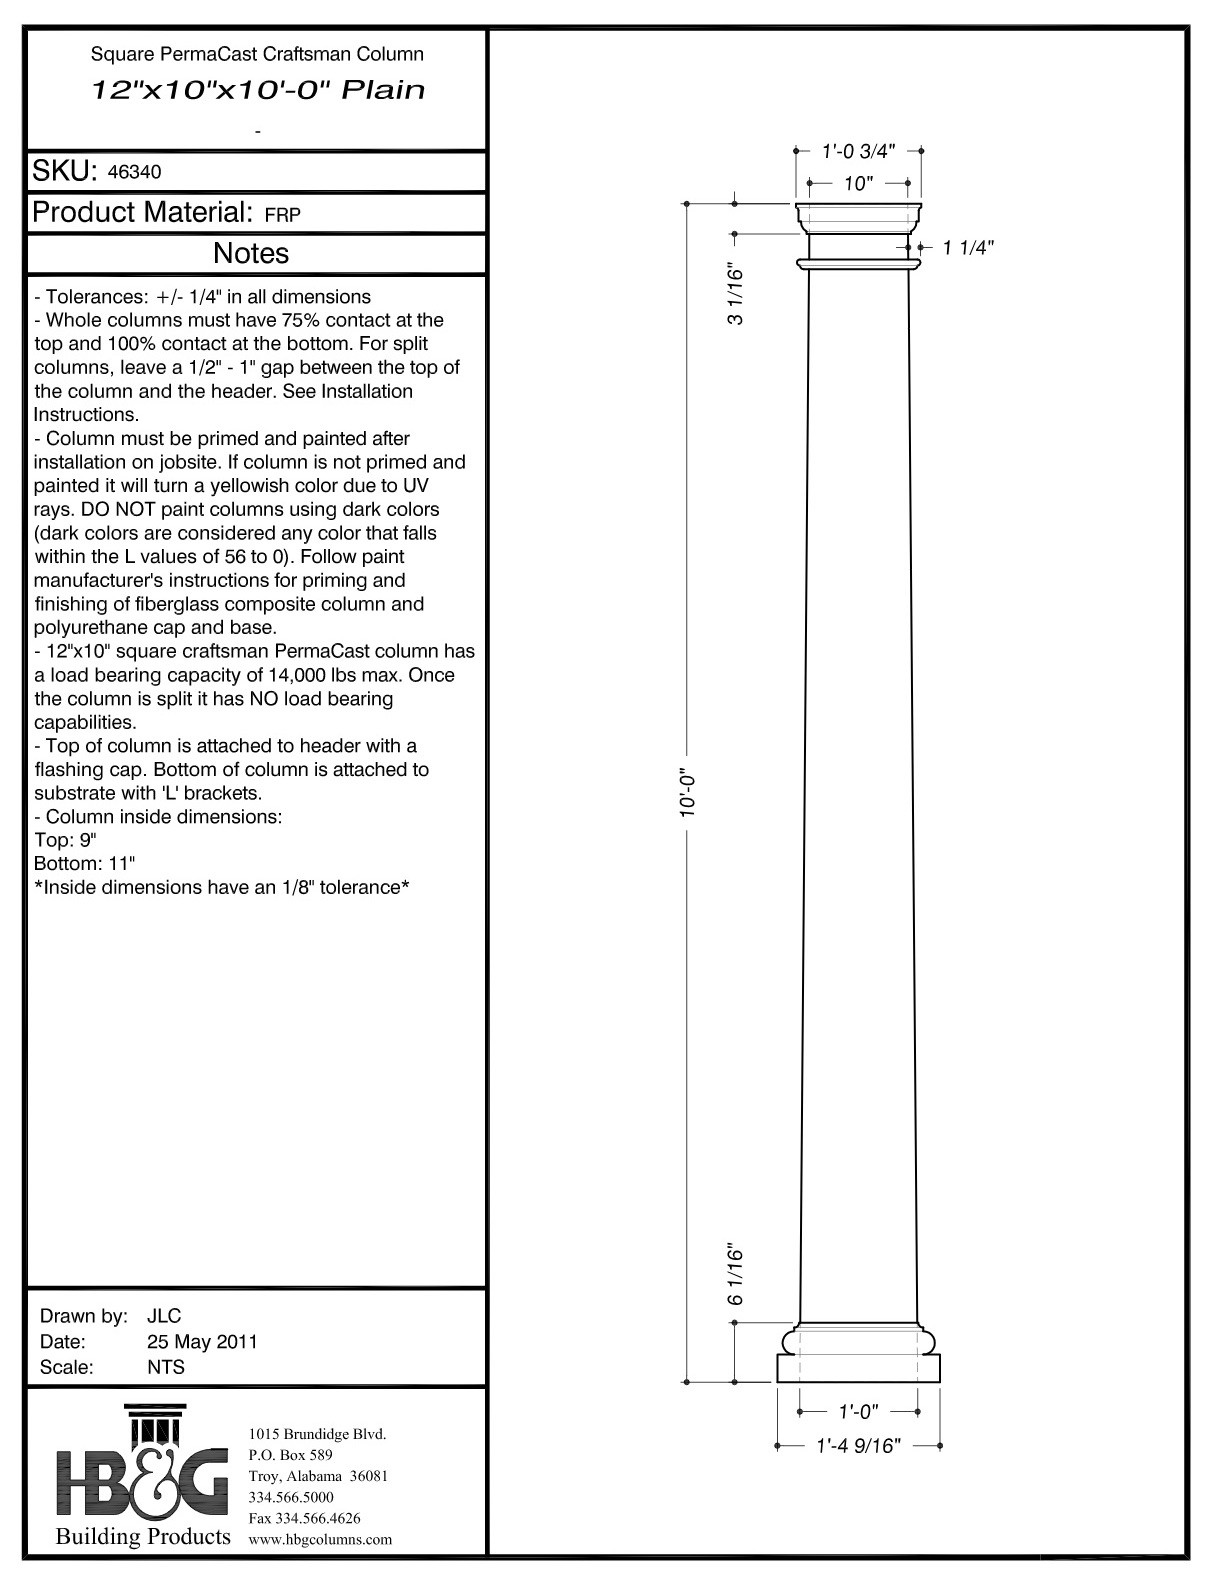 16/9 HB&G PermaCast Craftsman Column